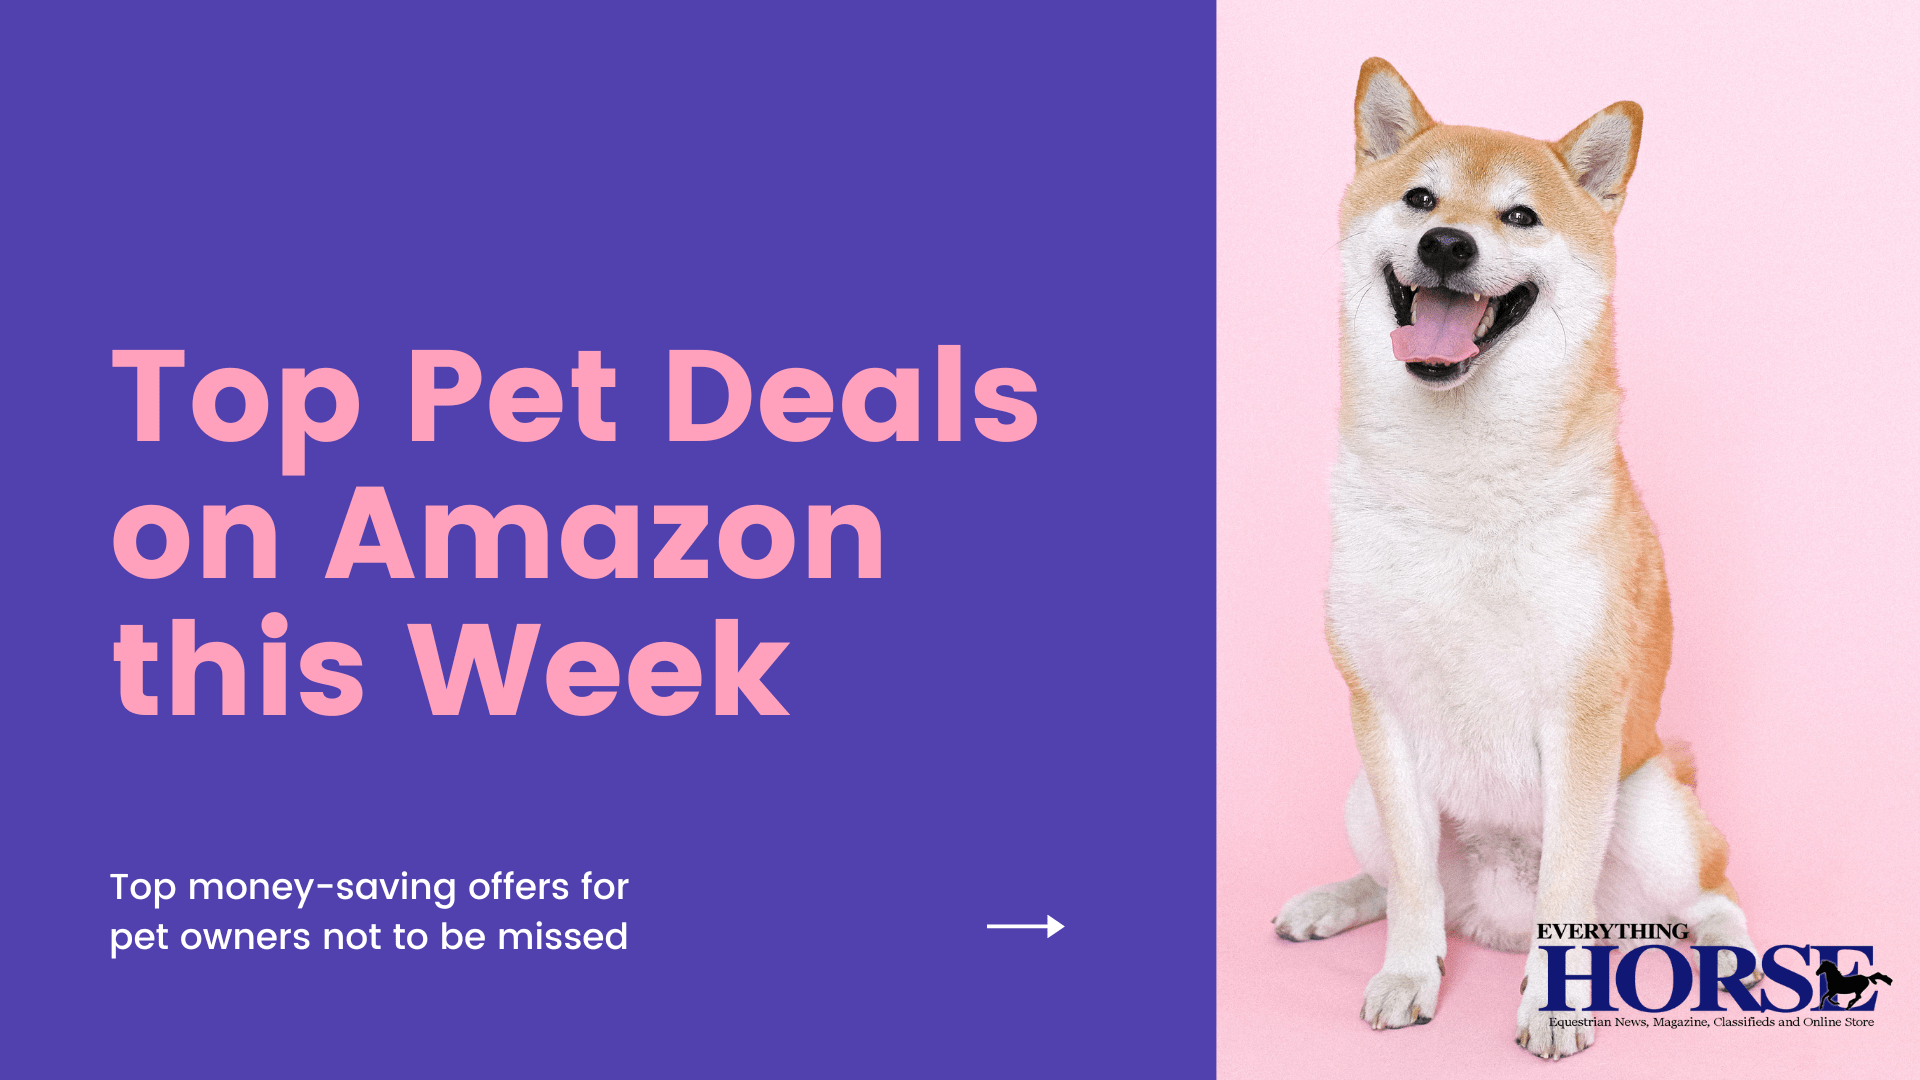 Top Pet Deals on Amazon this Week